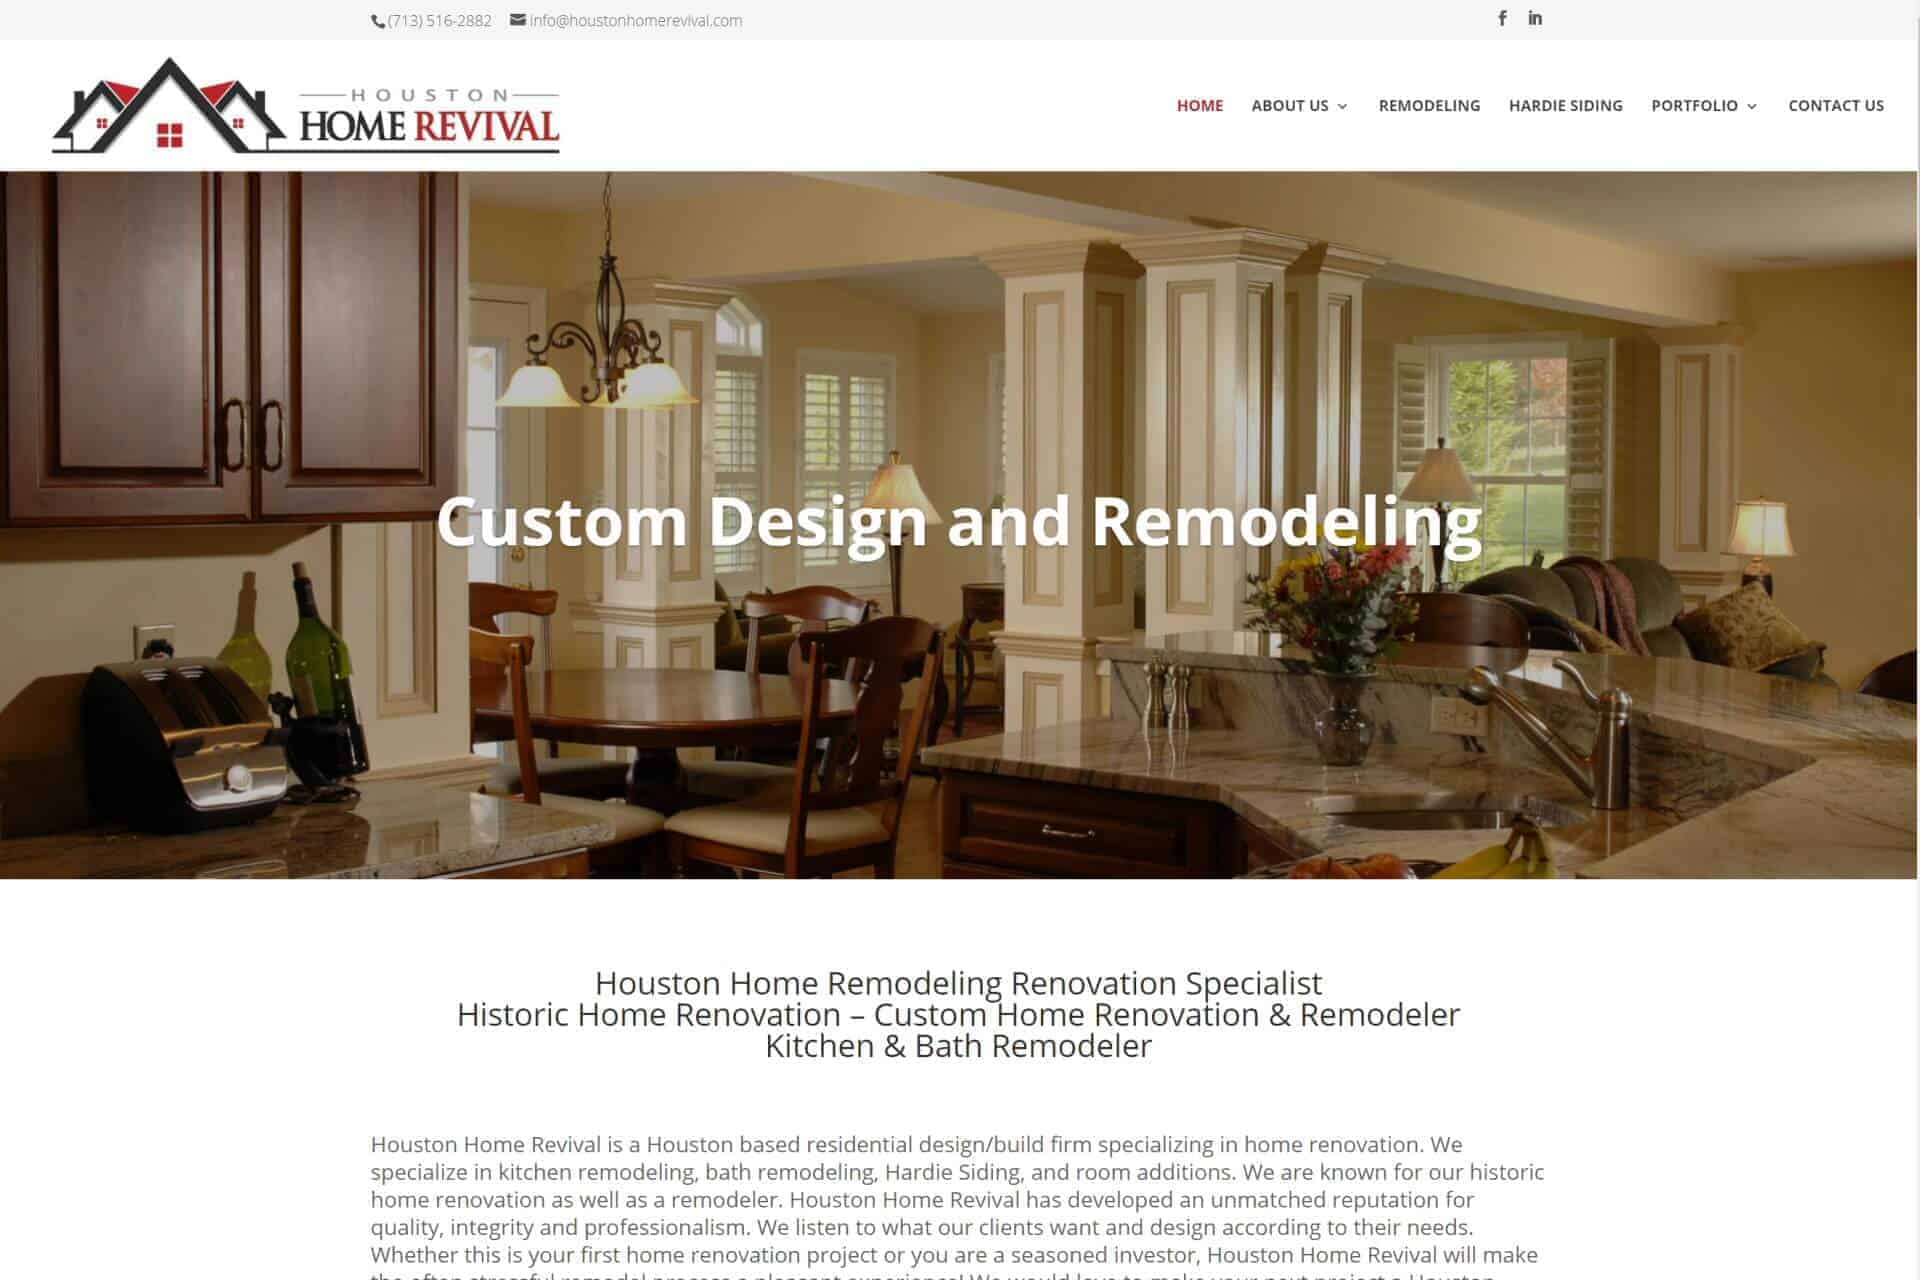 Houston Home Revival Home Remodeling & Renovation